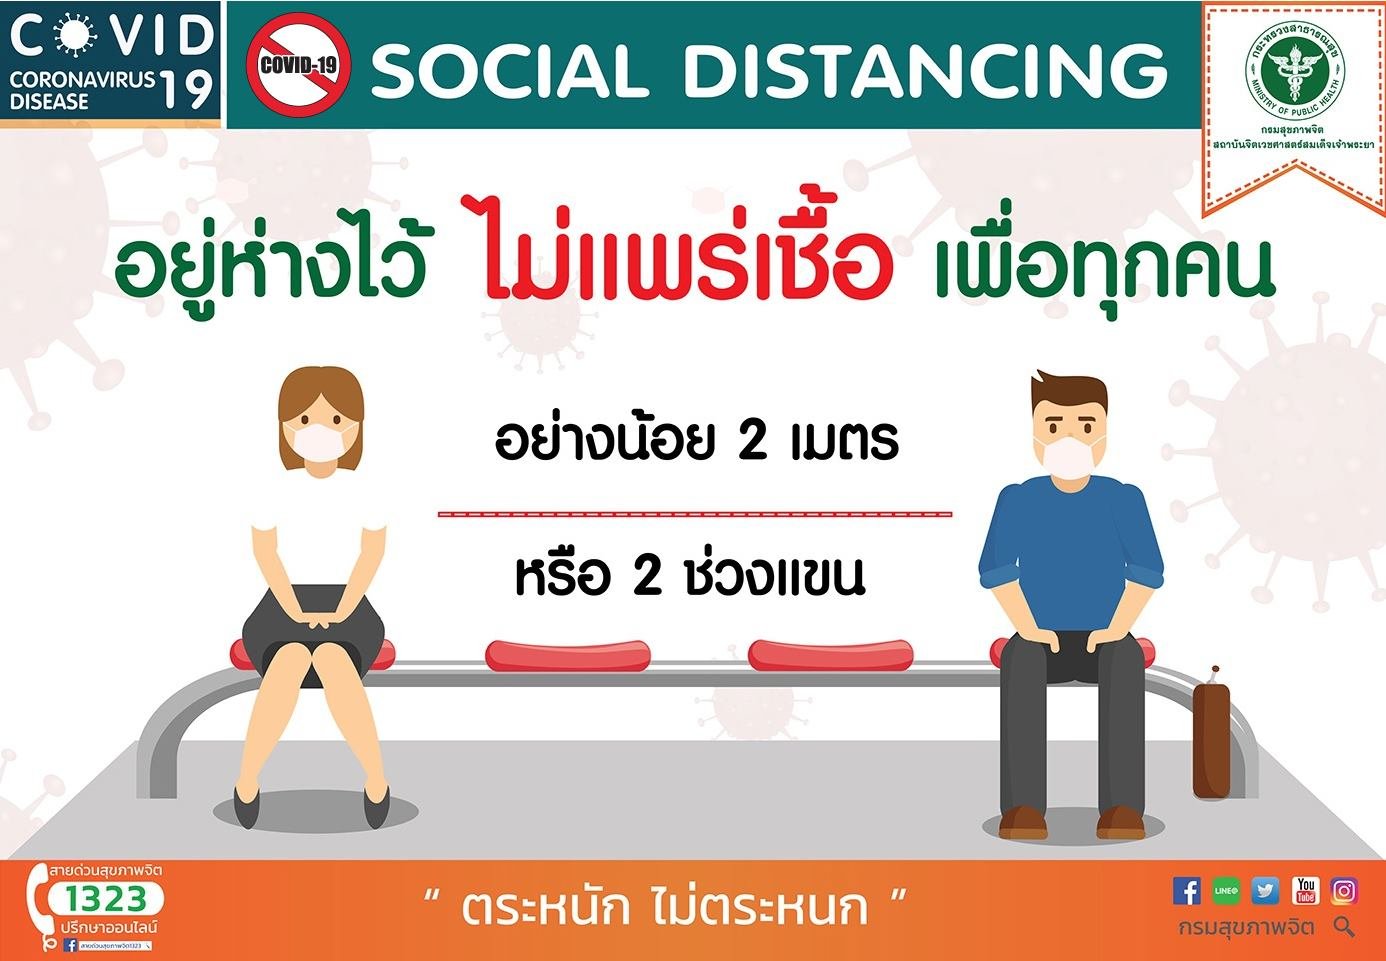 Social Distancing : อยู่ห่างไว้ ไม่แพร่เชื้อ เพื่อทุกคน